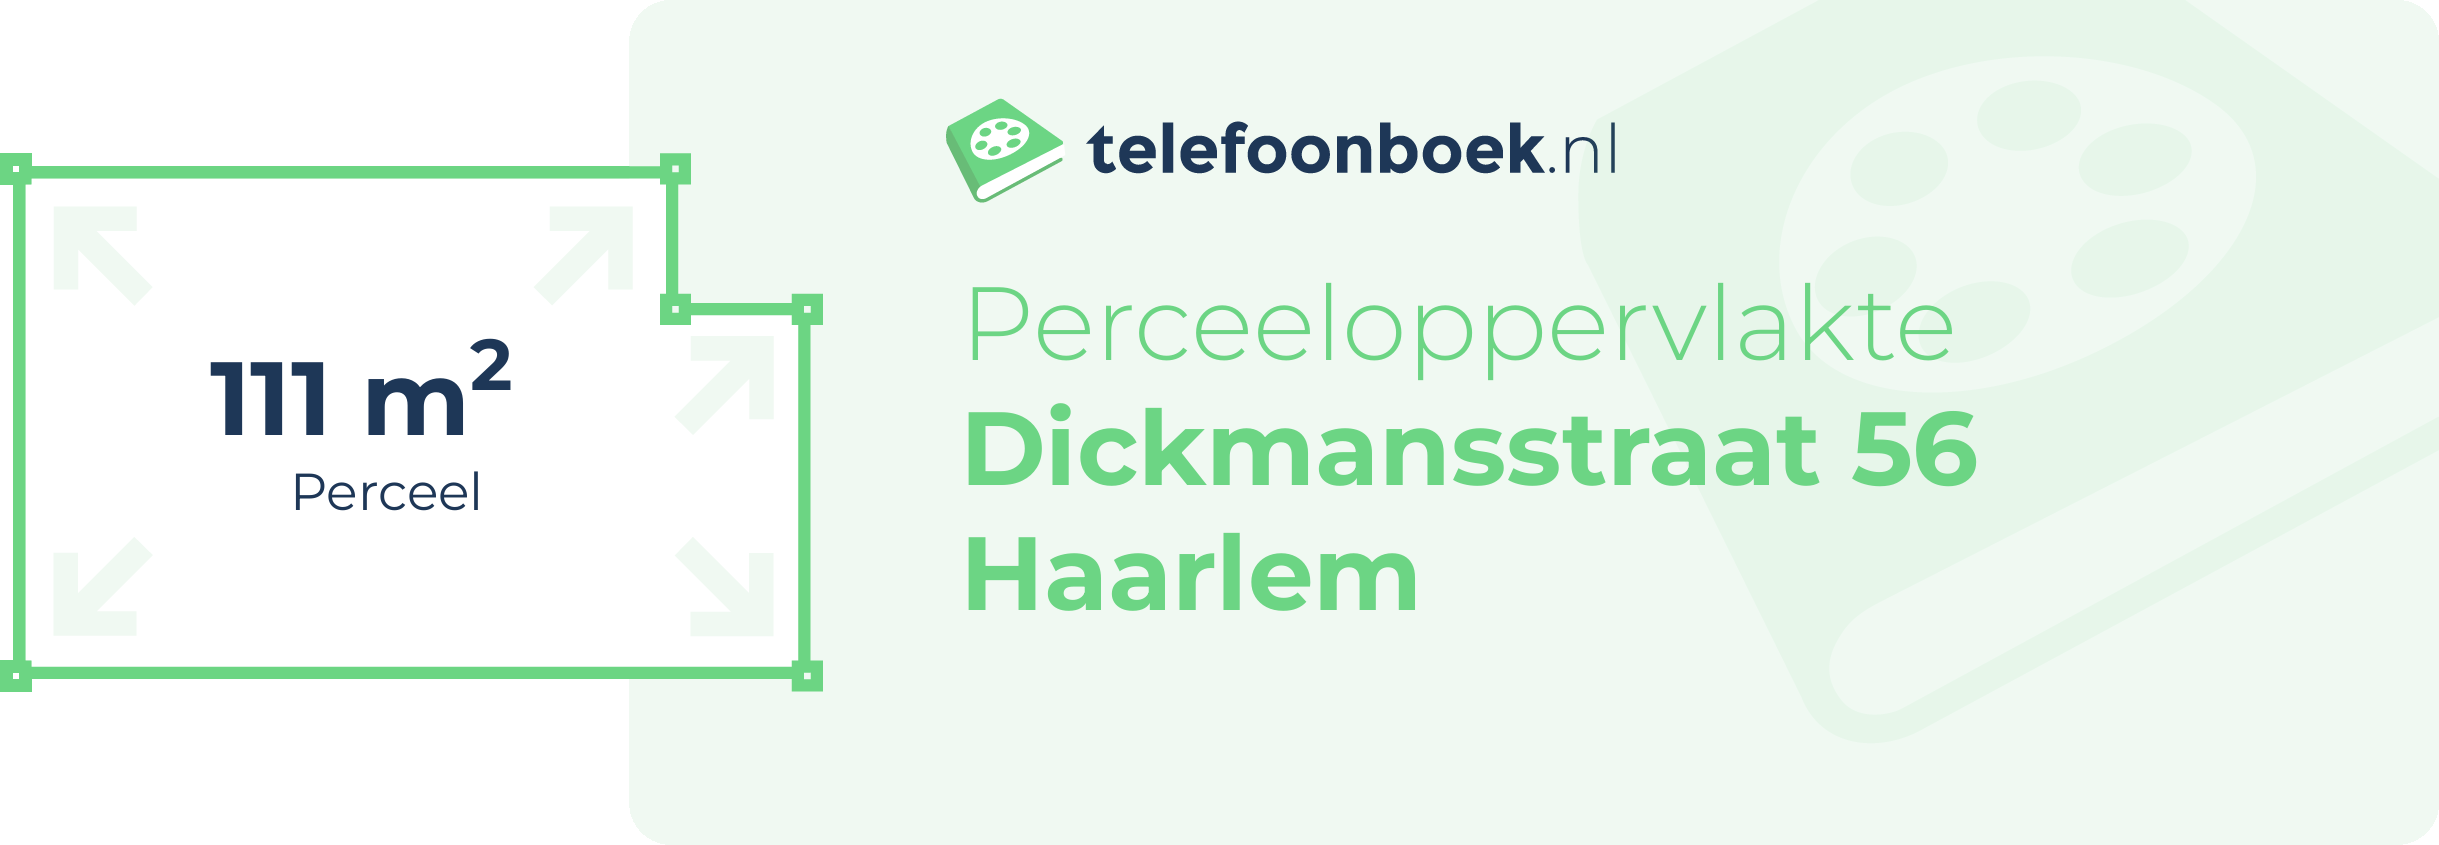 Perceeloppervlakte Dickmansstraat 56 Haarlem